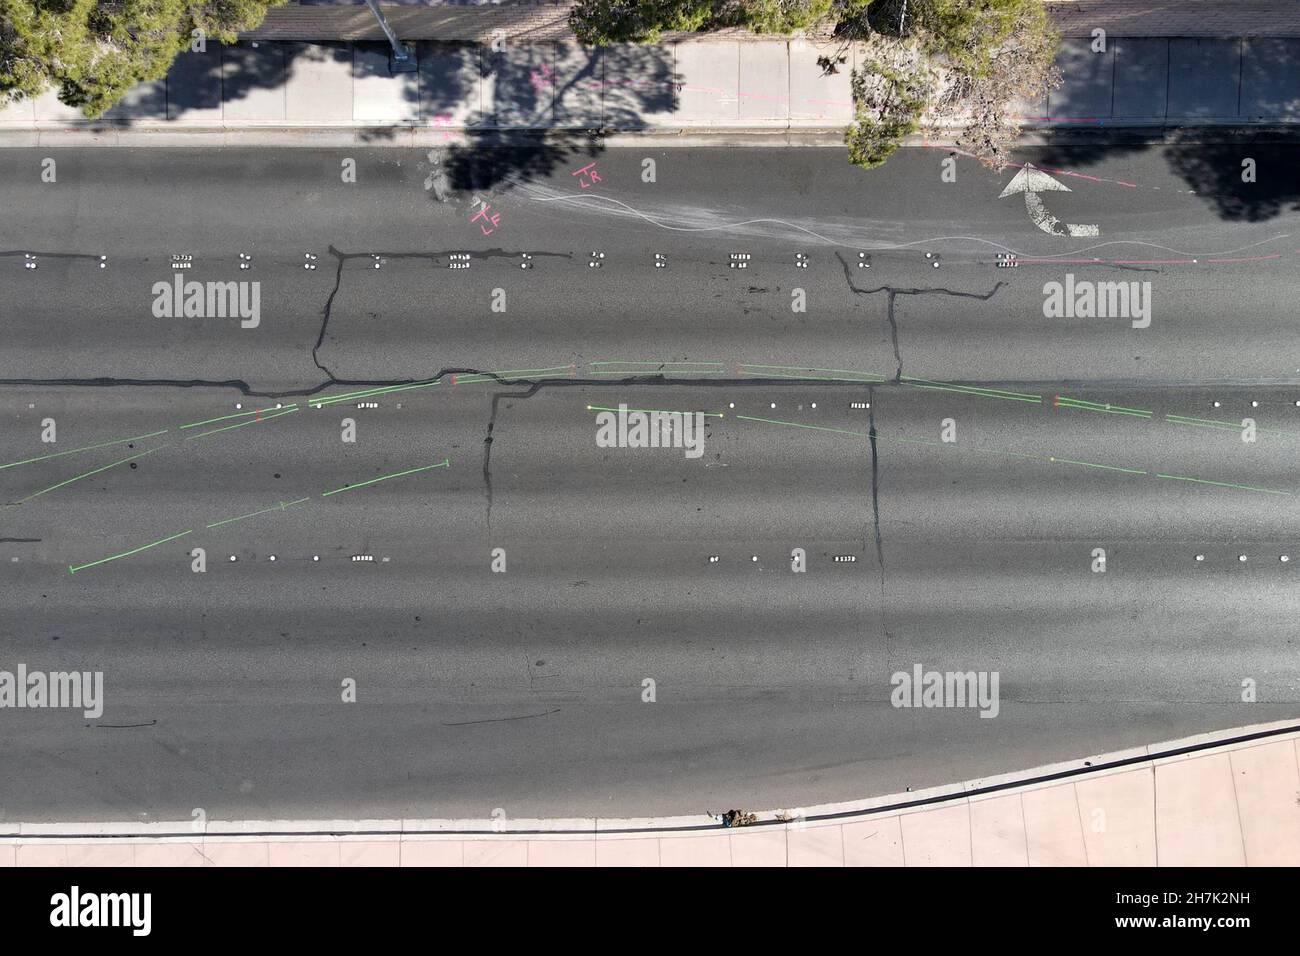 An aerial view of the the crash site involving a fatal DUI car crash involving Chevrolet Corvette driven by former Las Vegas Raiders receiver Henry Ru Stock Photo